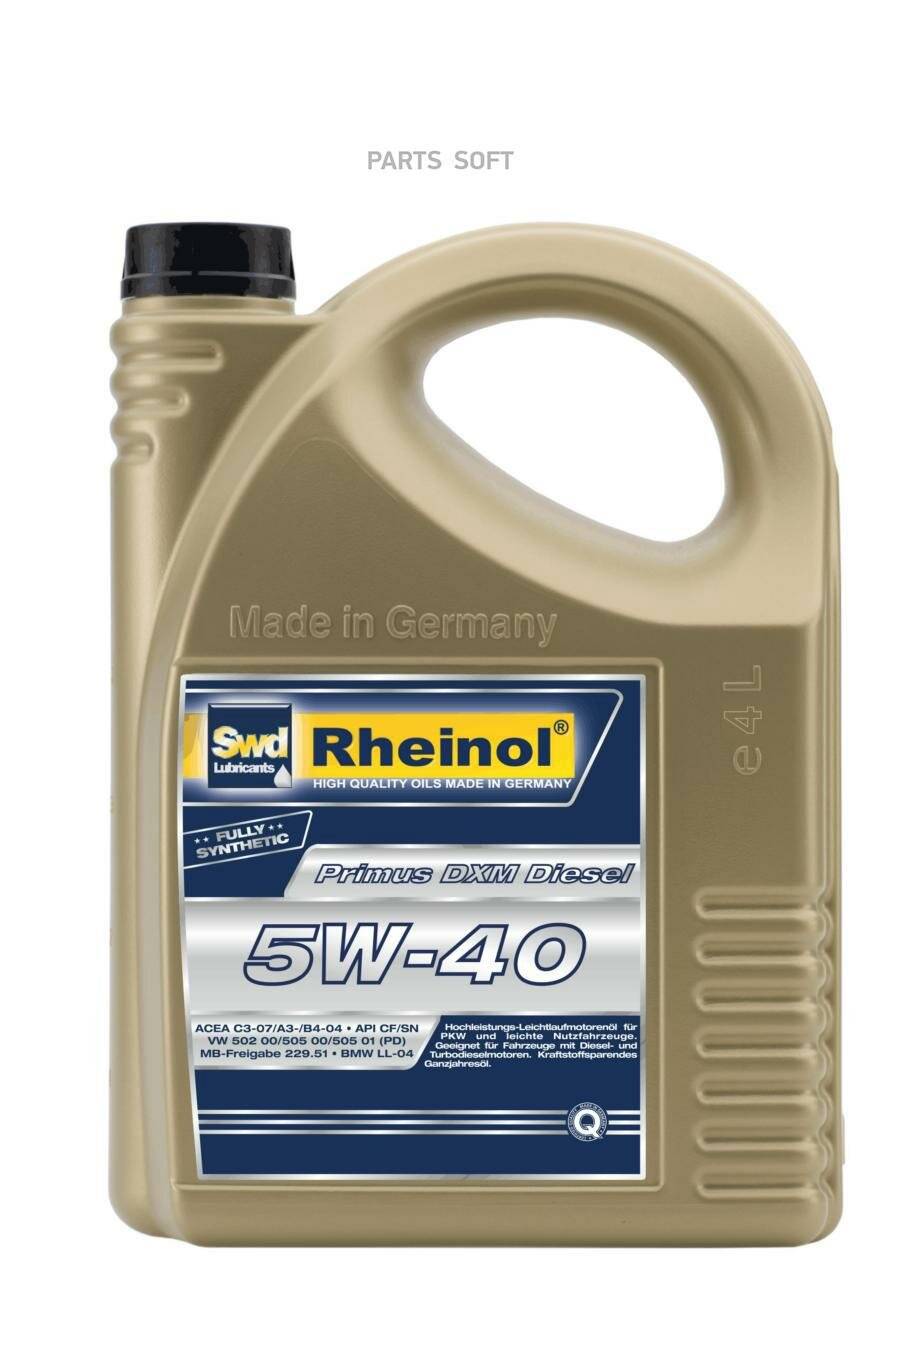 SWD RHEINOL 31239471 SWD Rheinol 5W-40 Primus DXM Diesel син. (4 л), шт